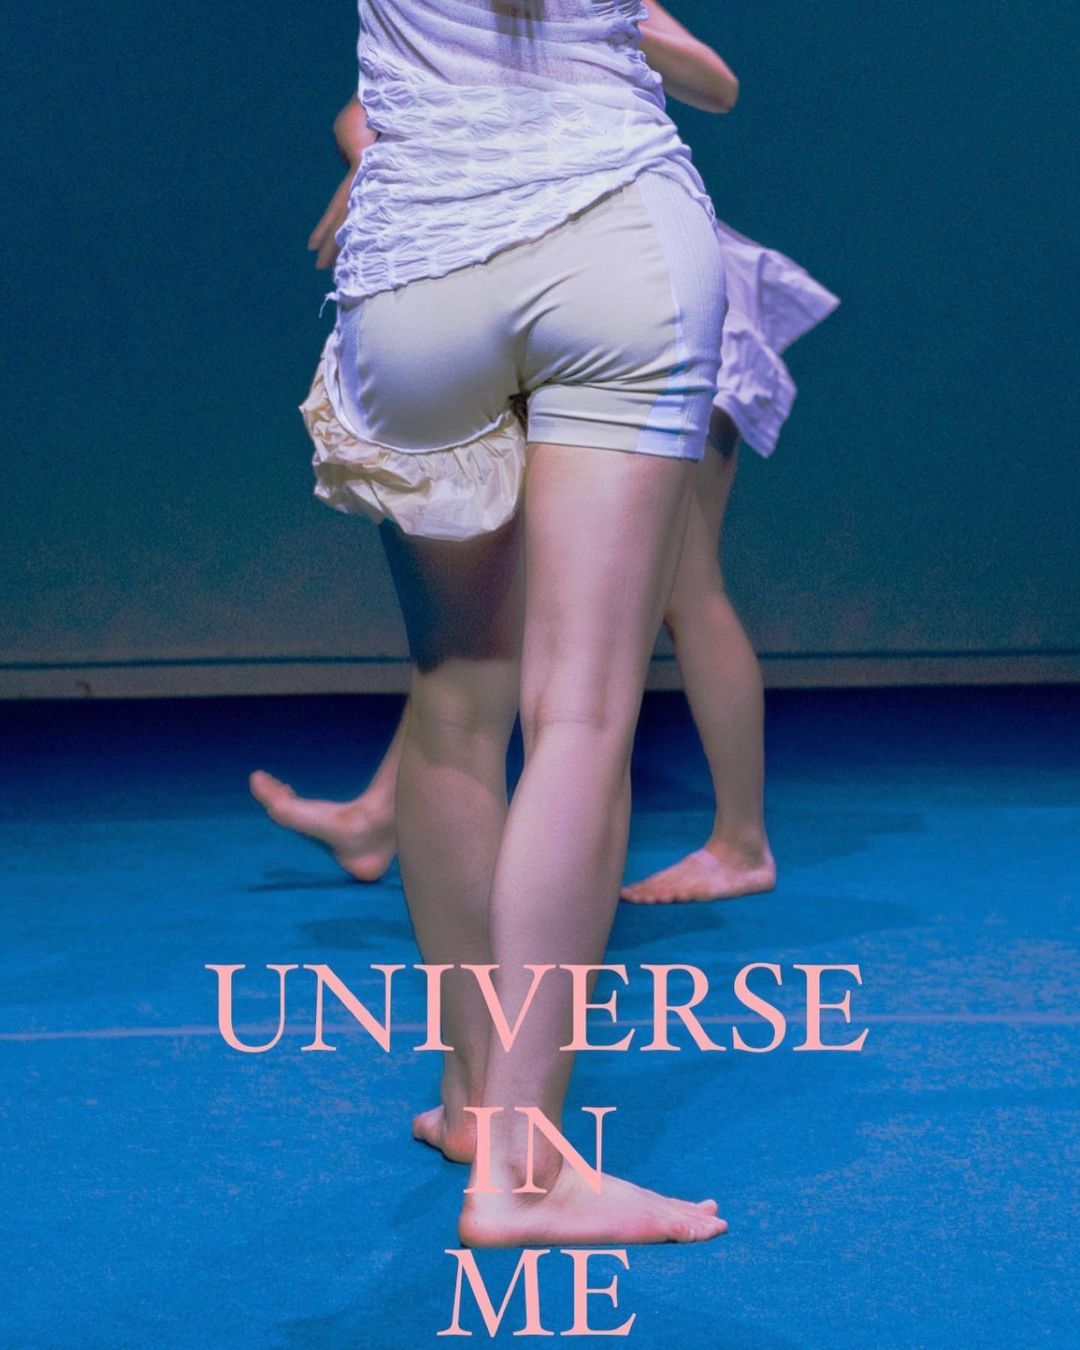 UNIVERSE IN ME(Universe에서)
https://www.instagram.com/p/ClSouzmJzjv/?igshid=NGJjMDIxMWI=